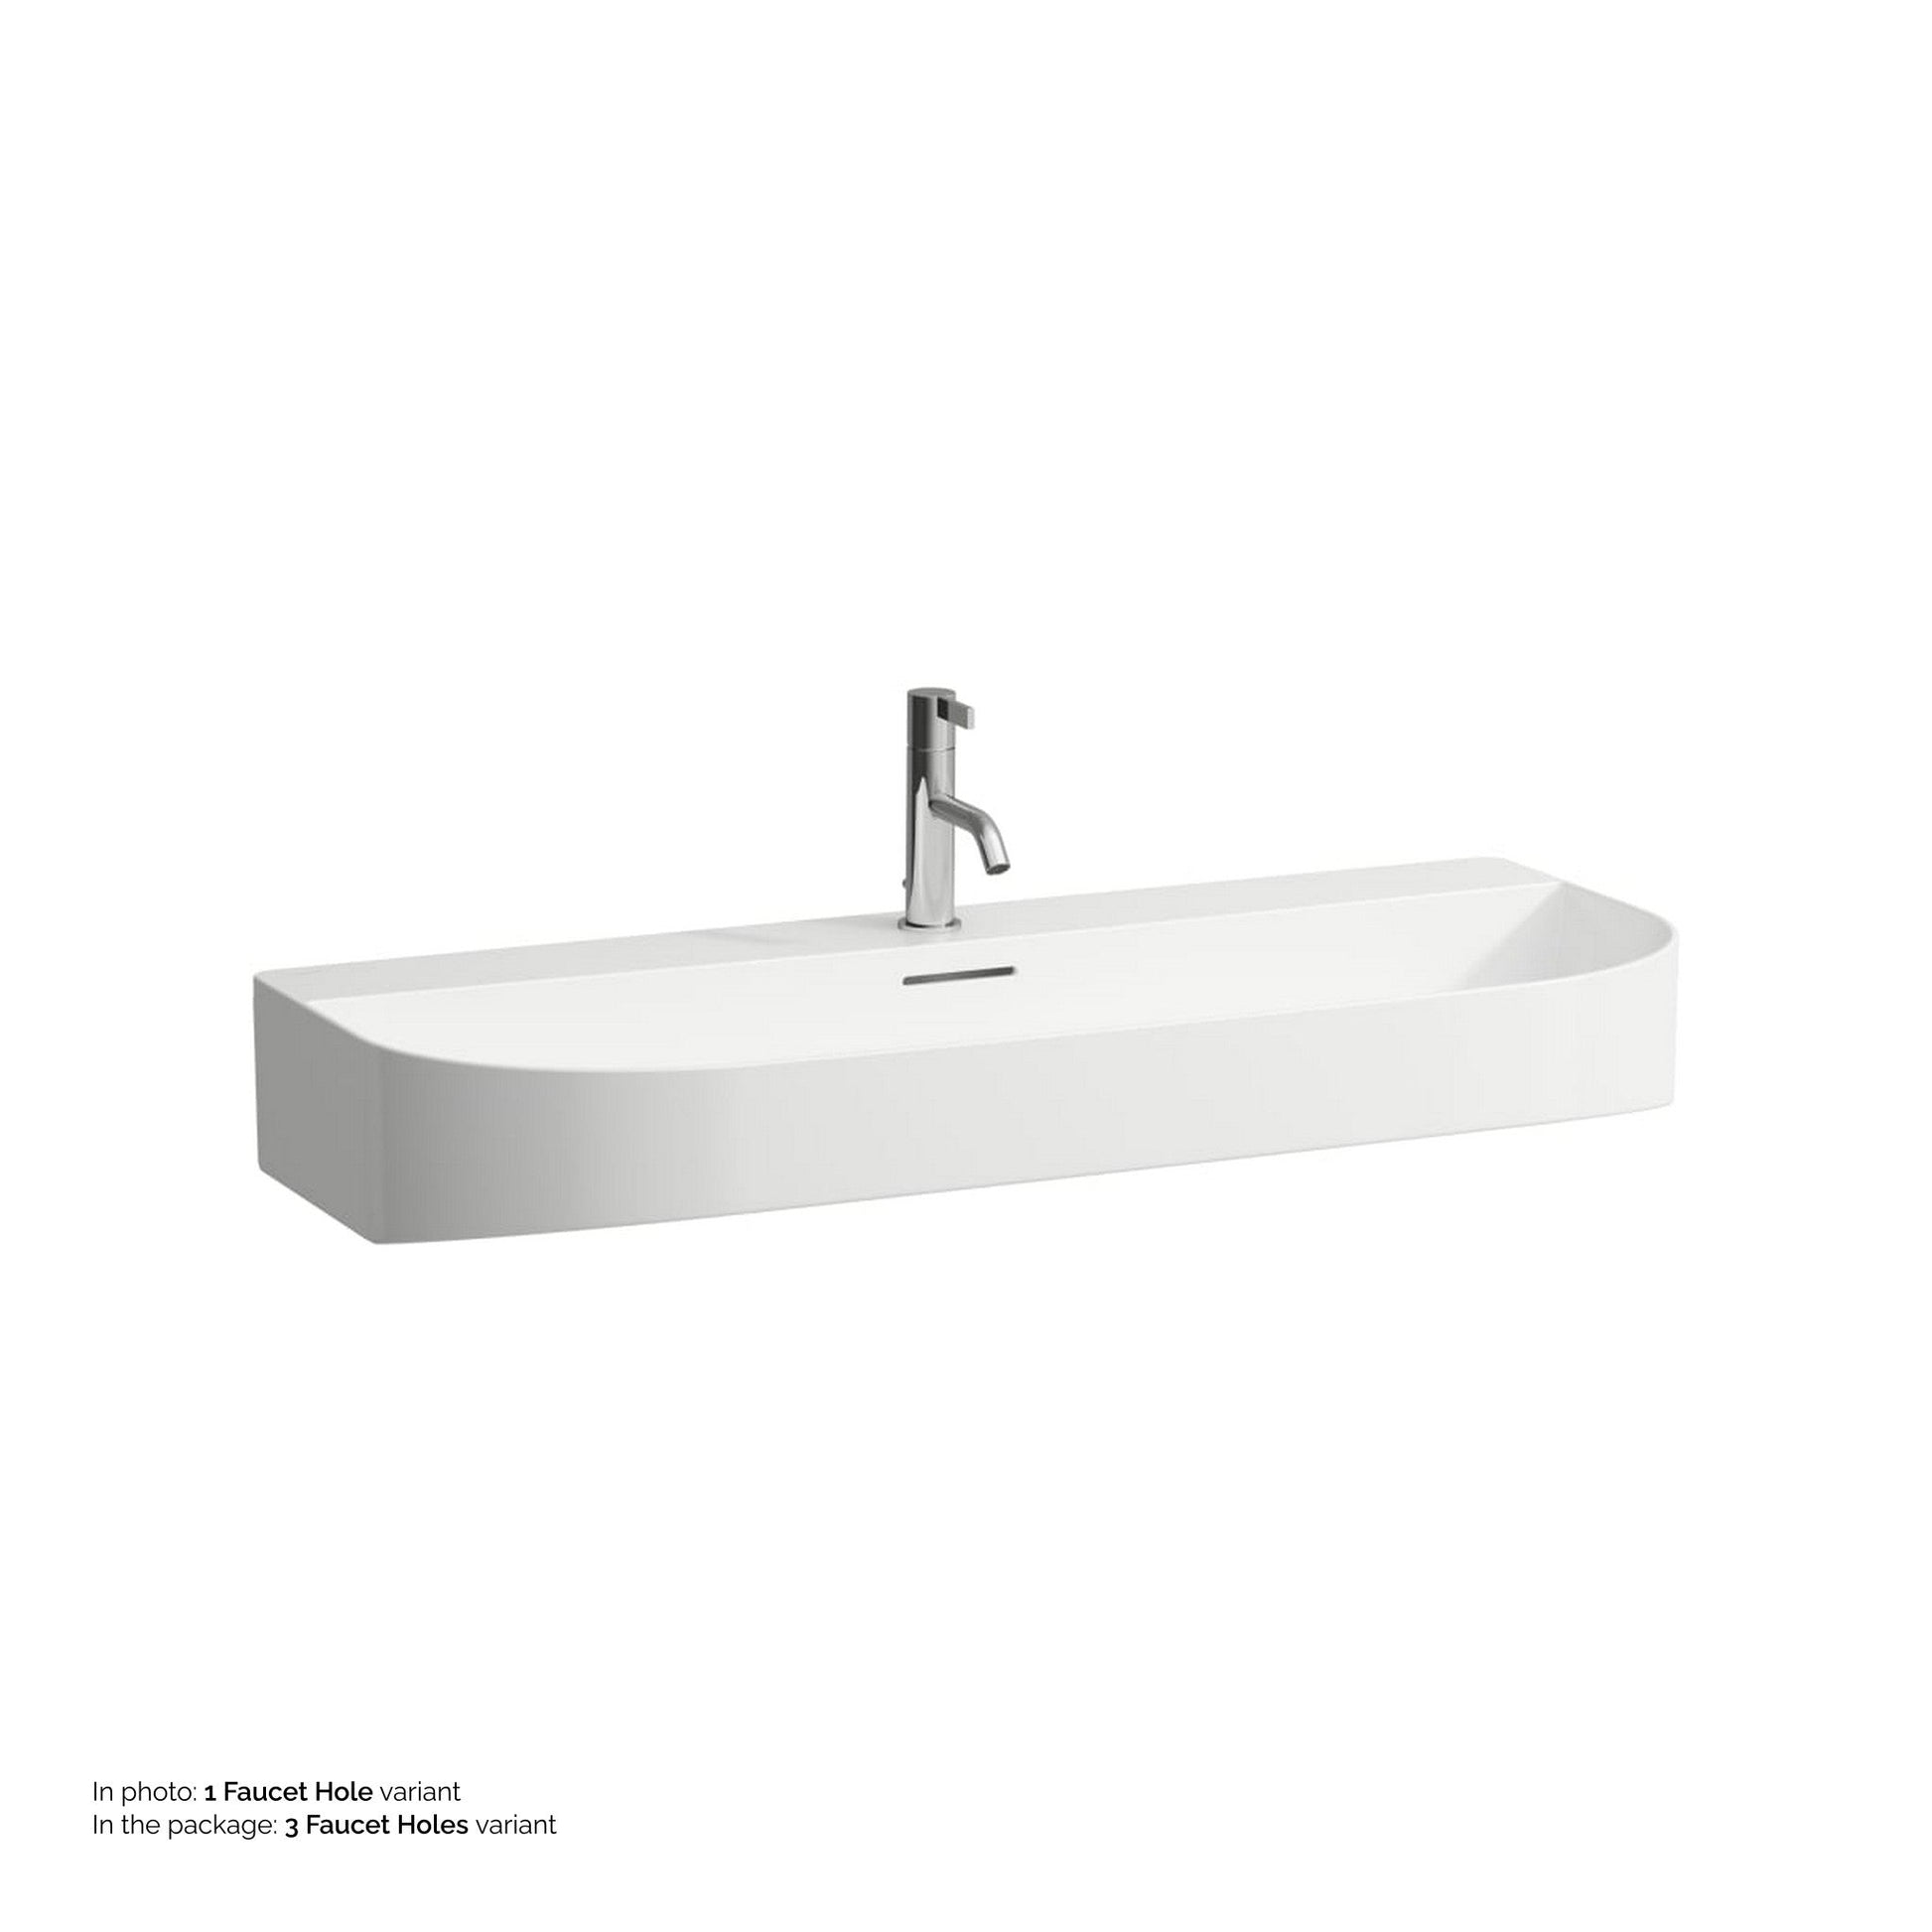 Laufen Sonar 39" Matte White Ceramic Countertop Bathroom Sink With 8" Spread 3 Faucet Holes